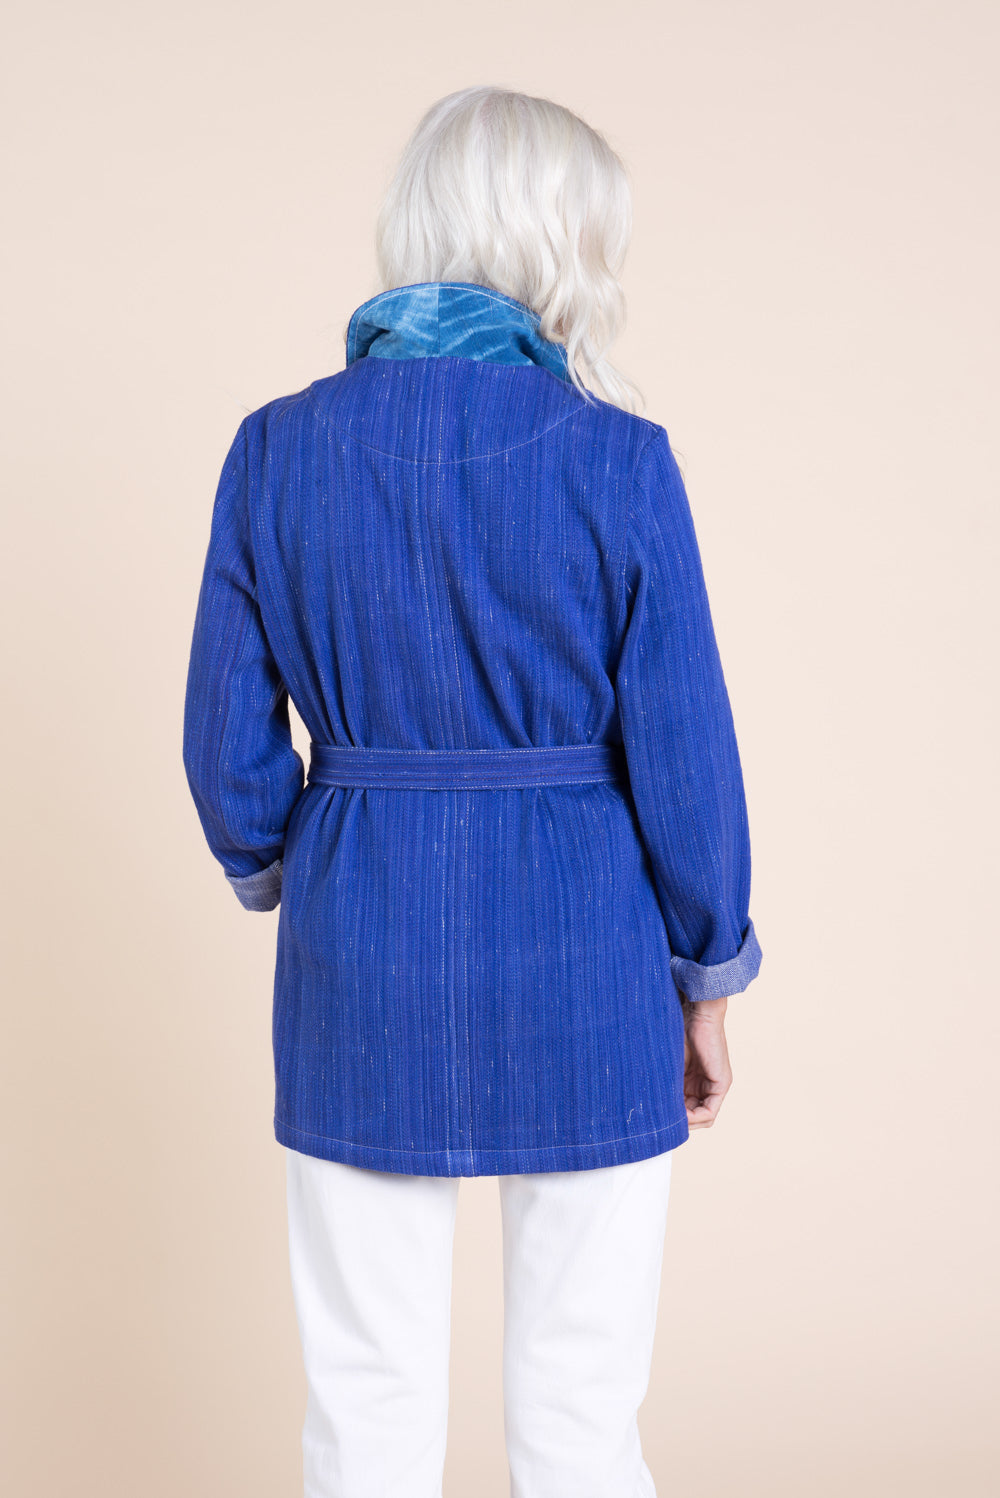 Closet Core Patterns | Sienna Maker Jacket - MaaiDesign